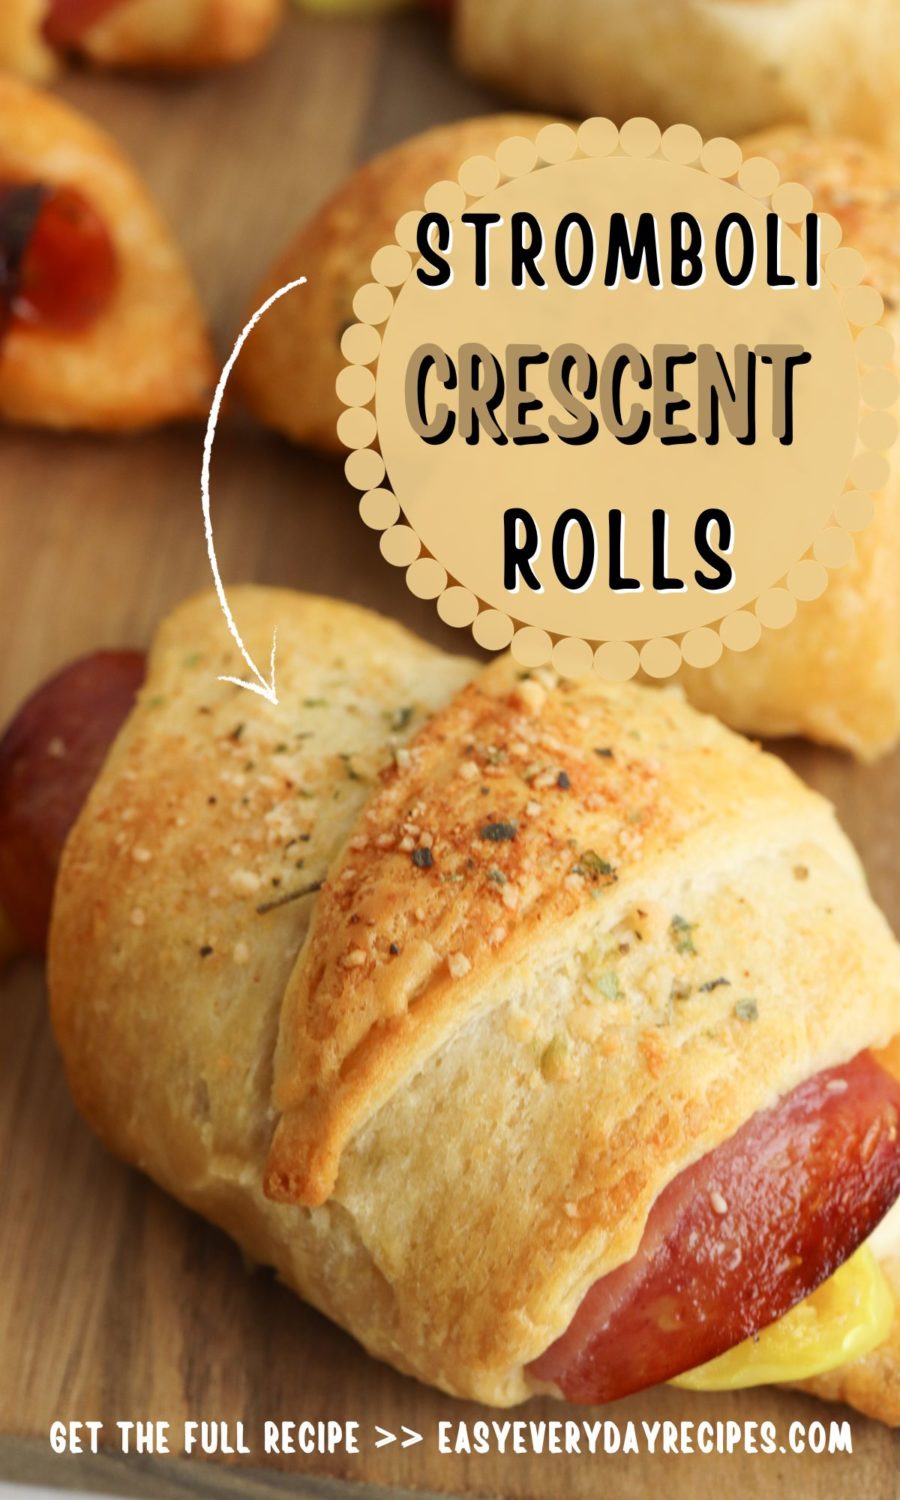 Stromboli crescent rolls with the text stromboli crescent rolls.